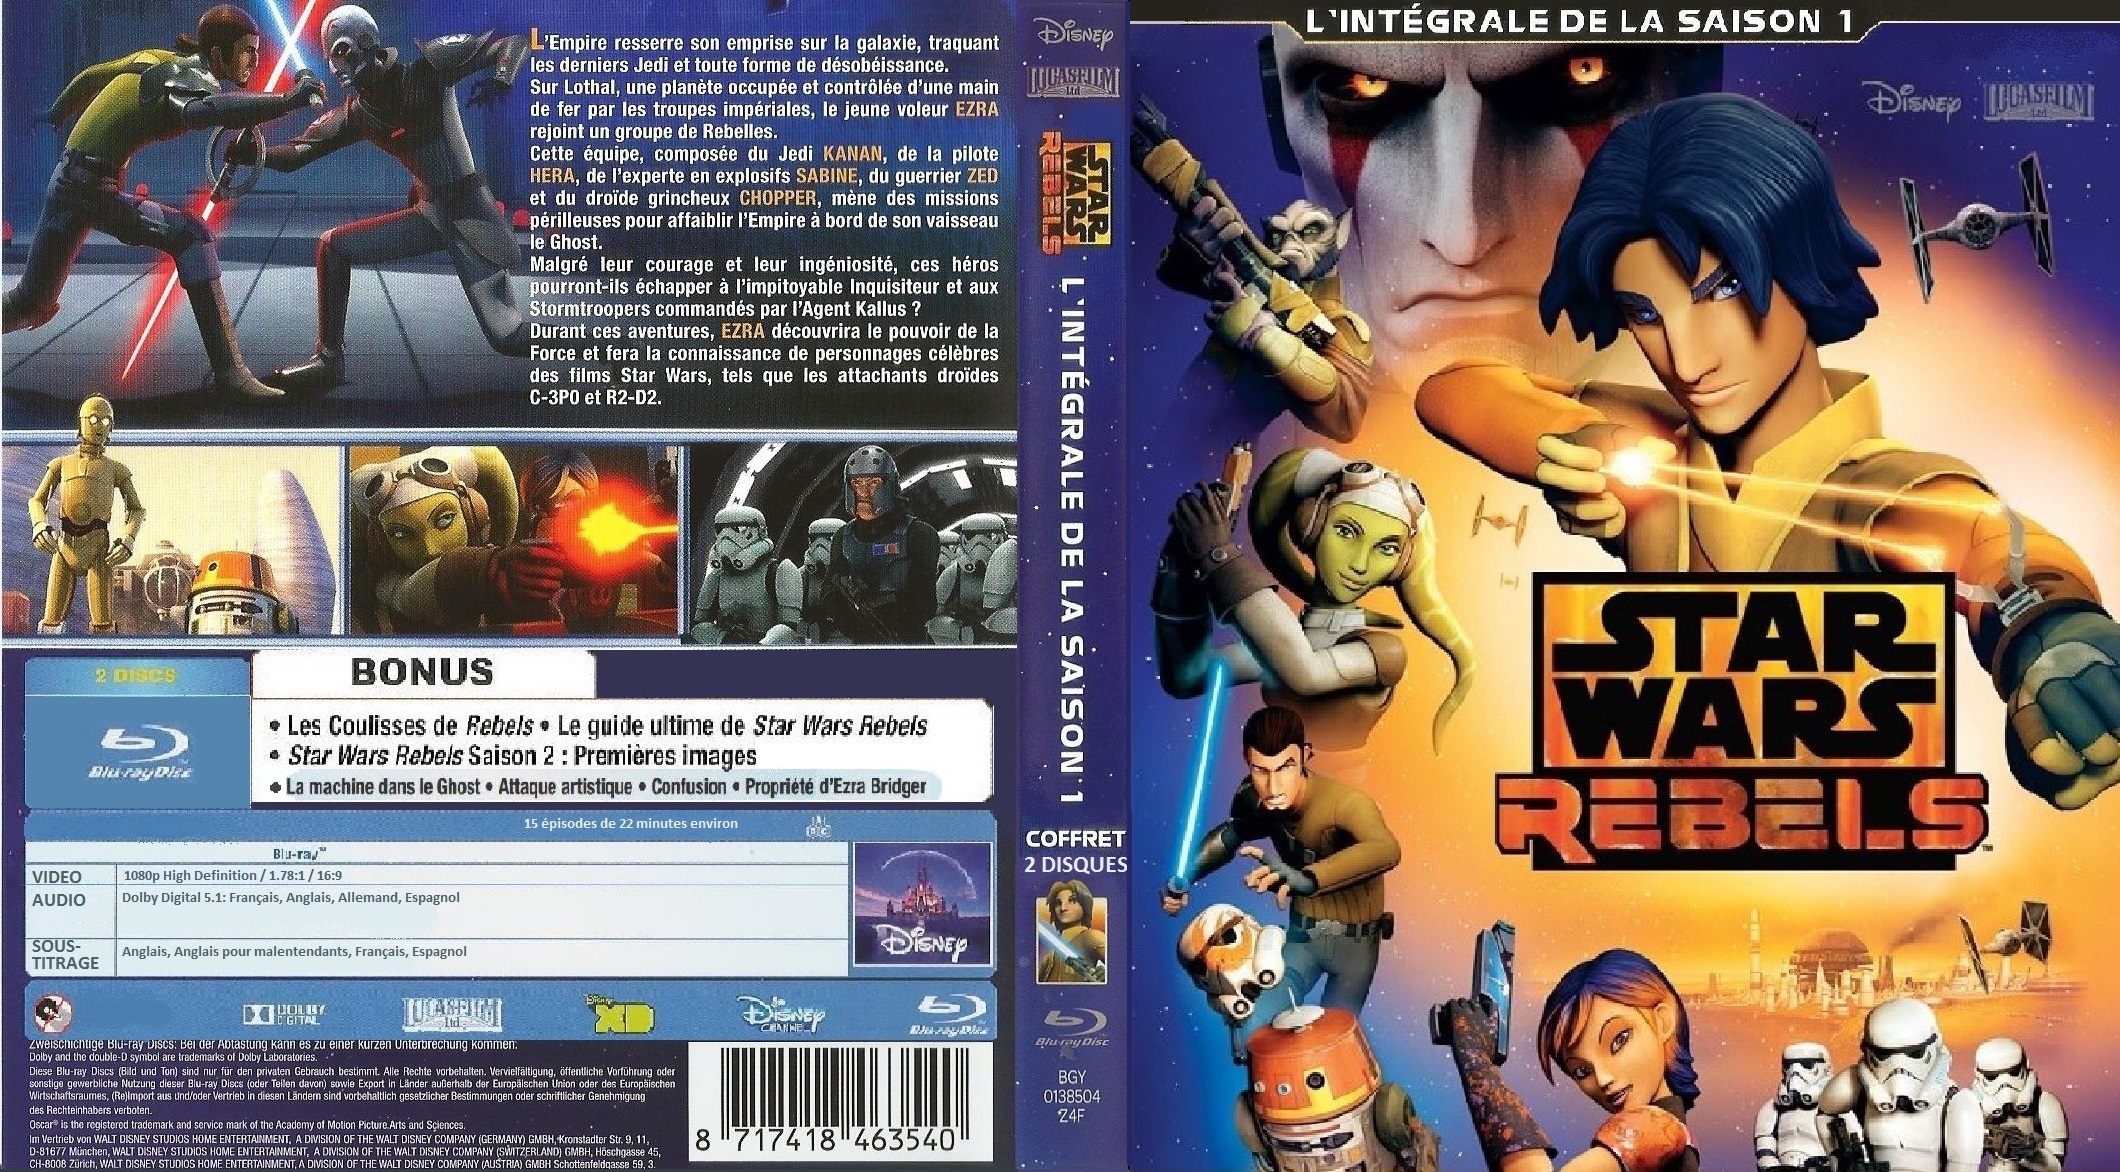 Jaquette DVD Star Wars Rebels saison 1 custom (BLU-RAY) v2